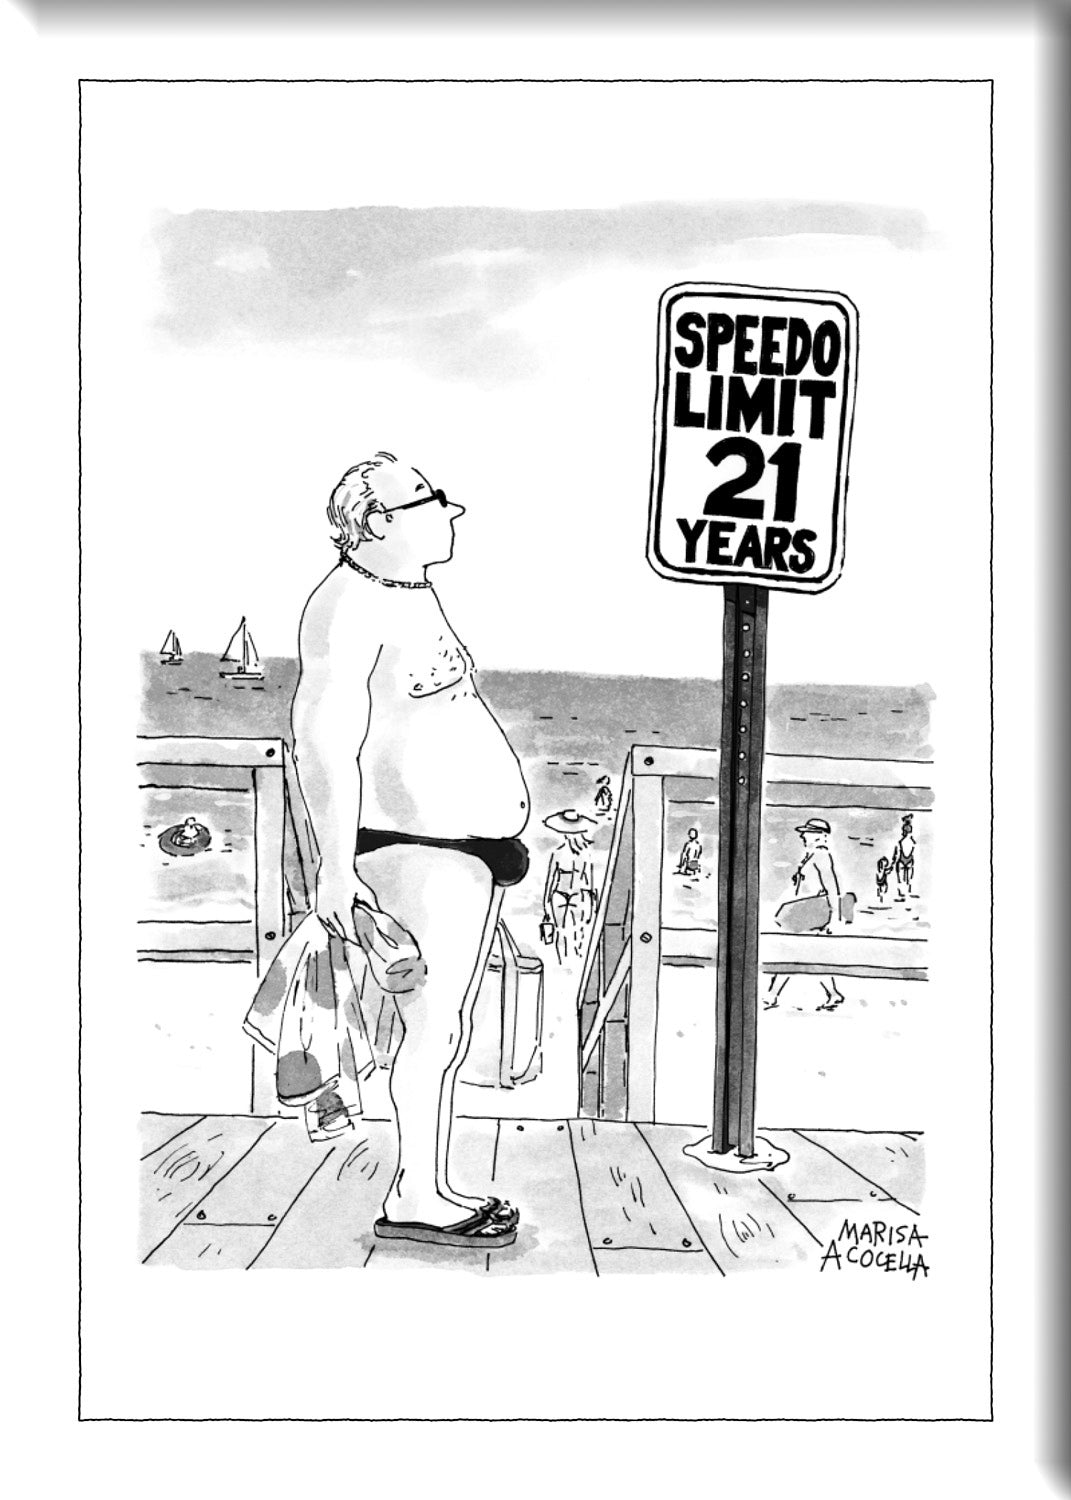 Speedo Limit (By New Yorker) - Hard Magnet